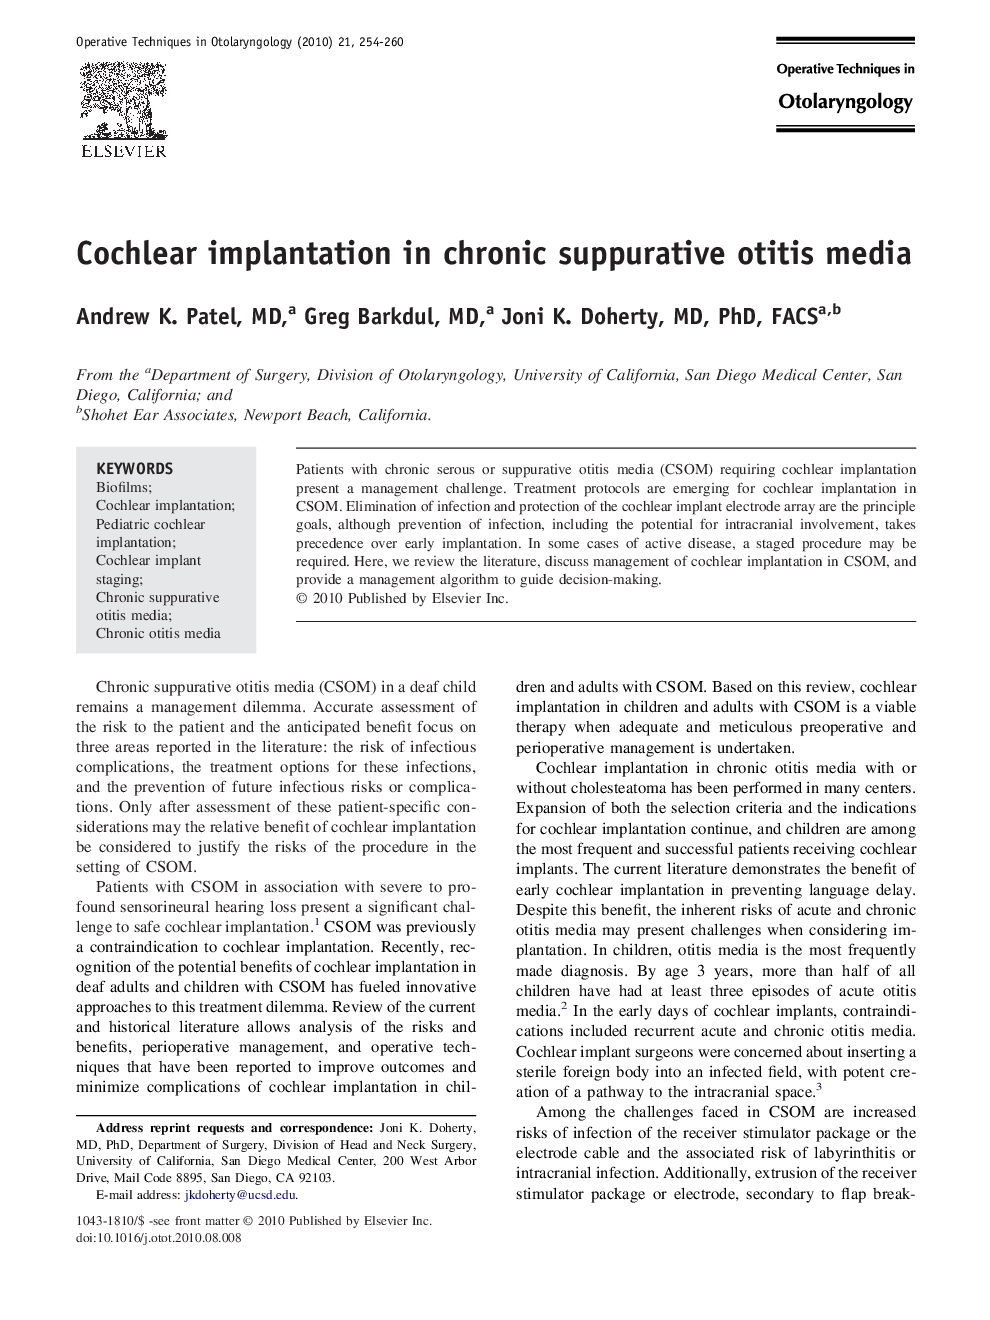 Cochlear implantation in chronic suppurative otitis media